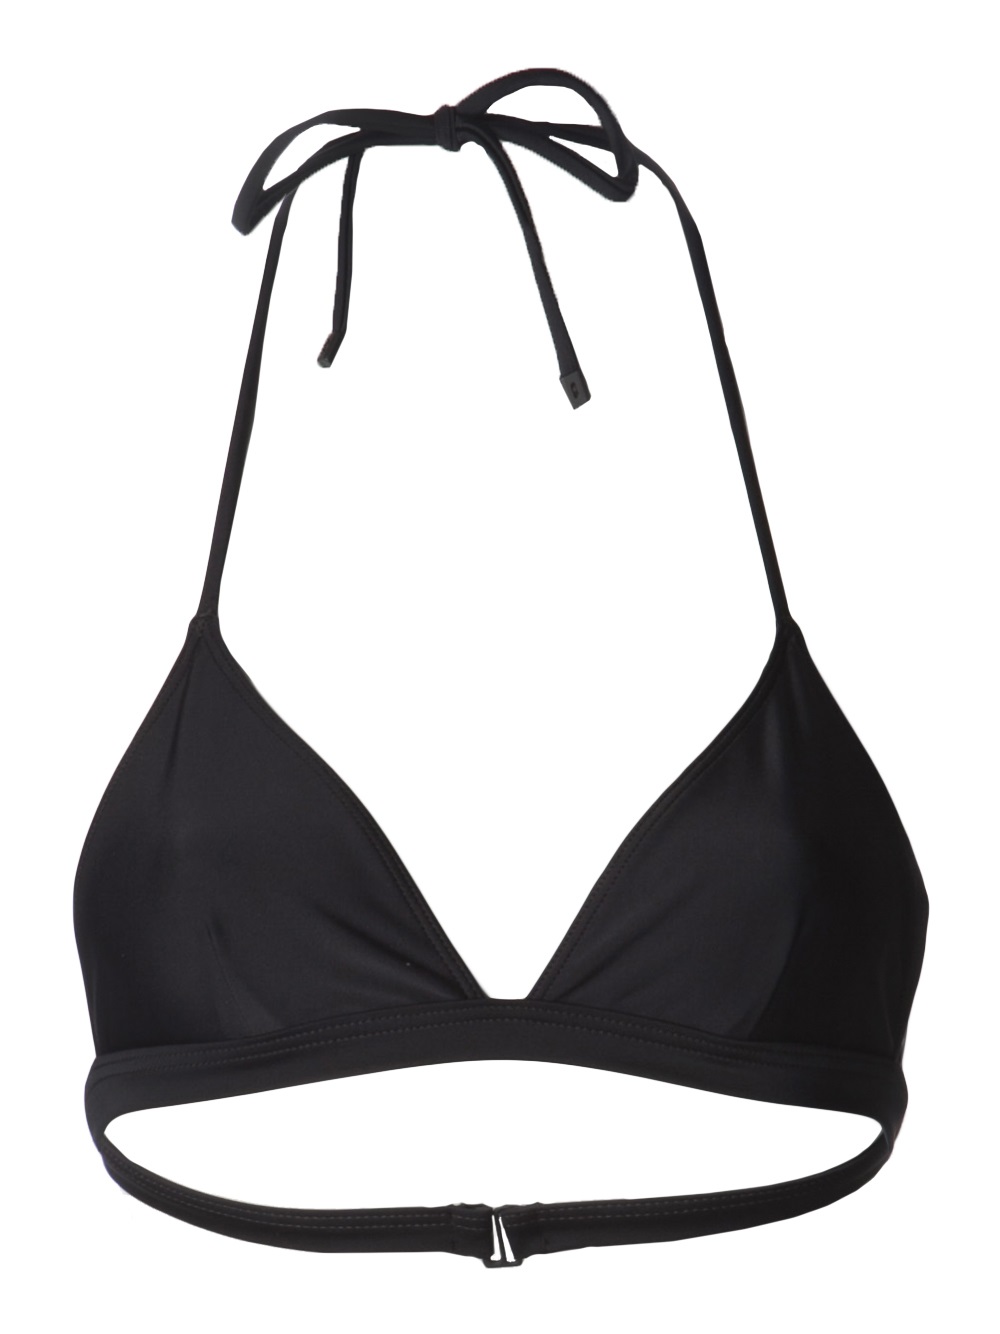 Lyst - T By Alexander Wang Triangle Bikini Top in Black